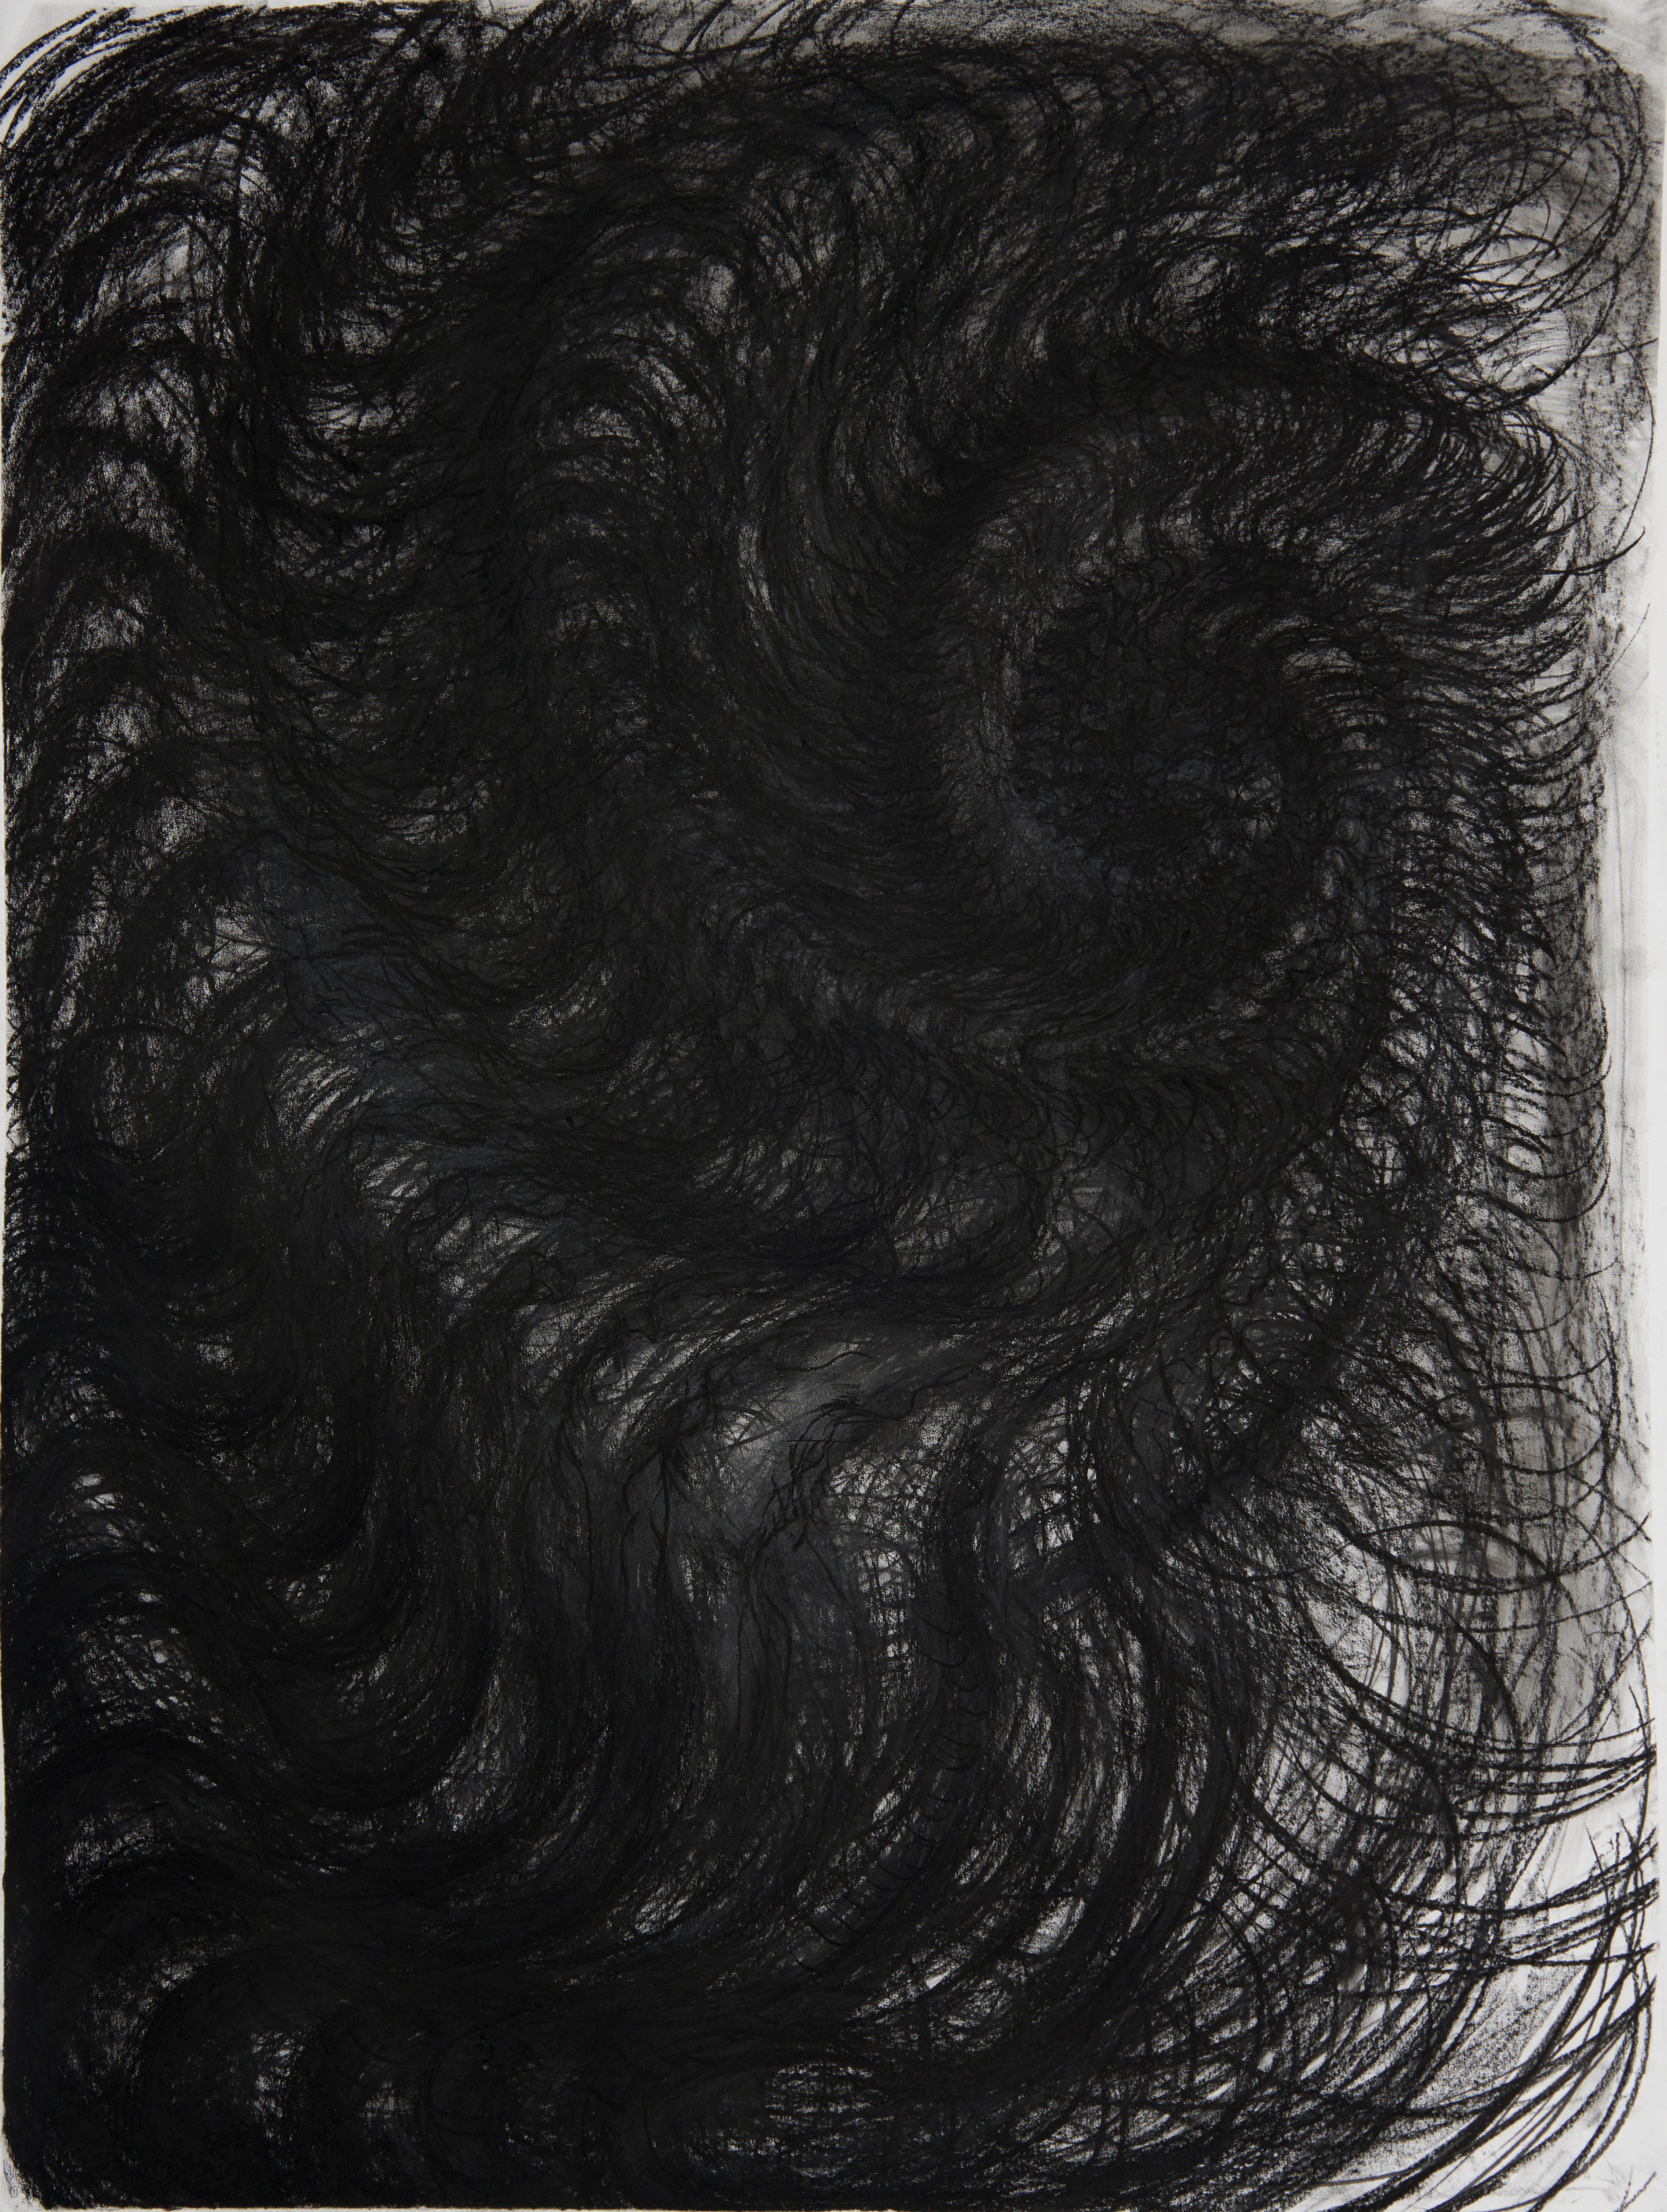  Vortex Study, 2018                                                                                                               135x 100 cm charcoal on paper 